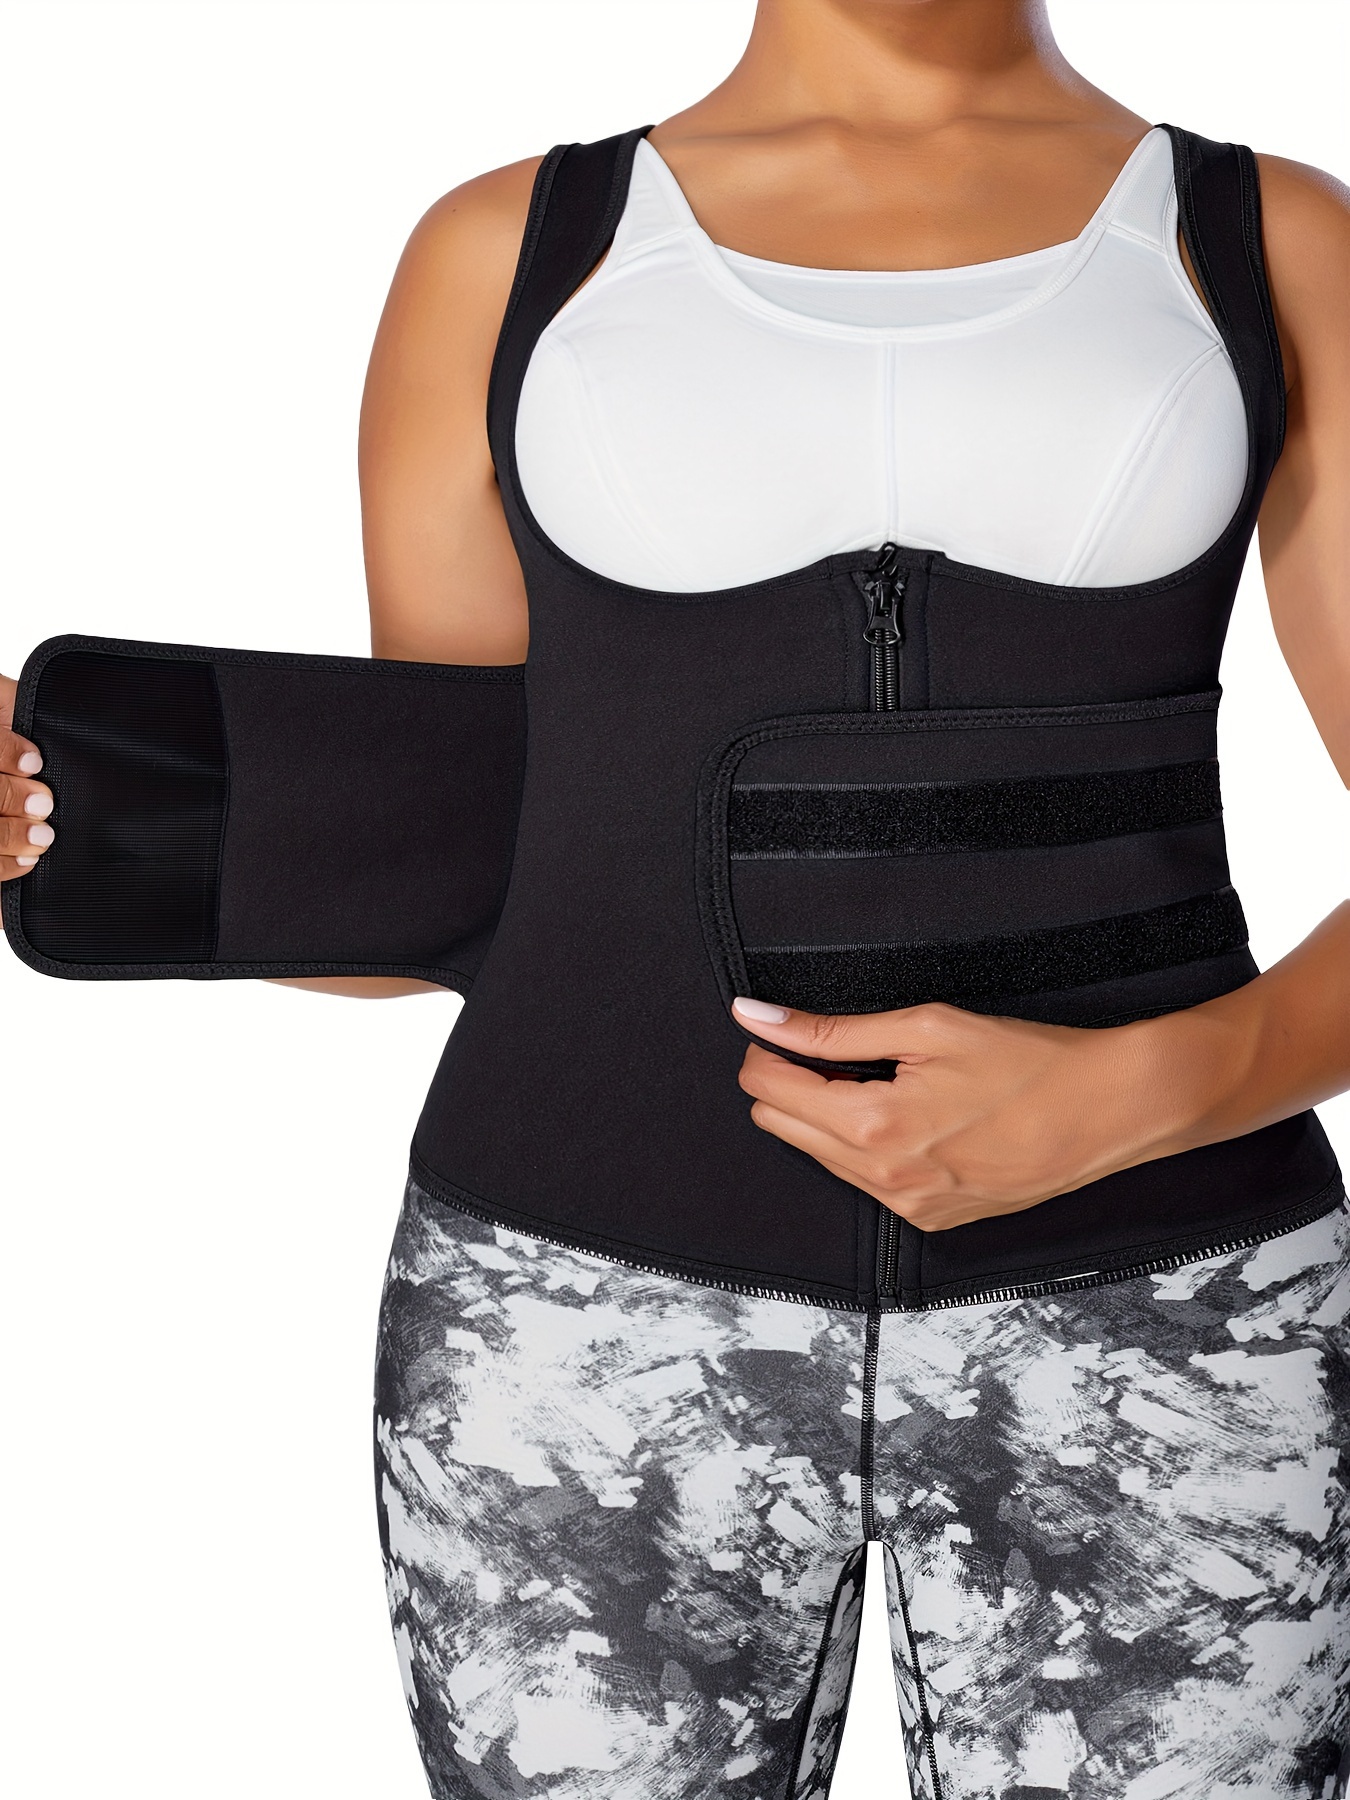 Waist Trainer Tank Top For Women, Underbust Corset Cincher Tummy Control  Body Shaper Sport Girdle With Adjustable Belt, Women's Activewear